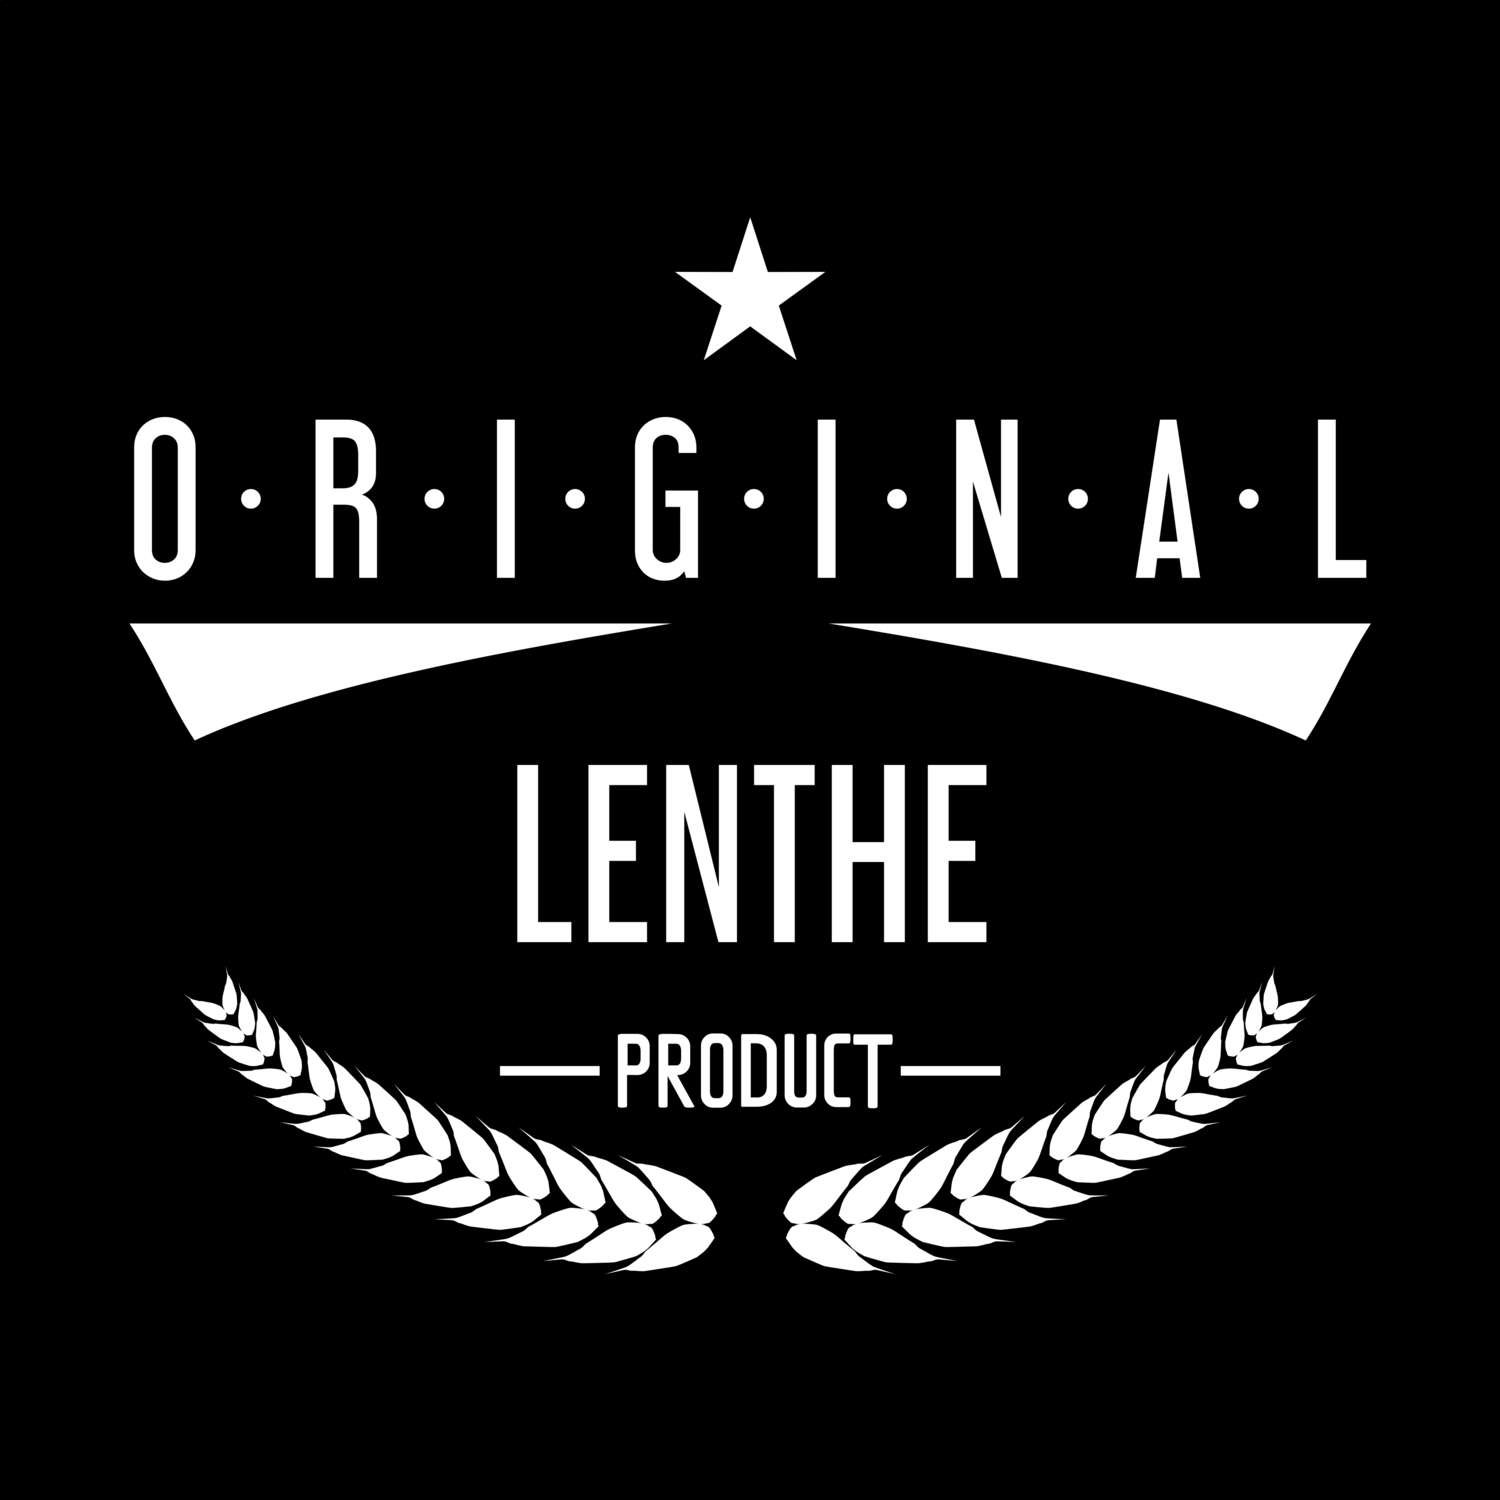 Lenthe T-Shirt »Original Product«